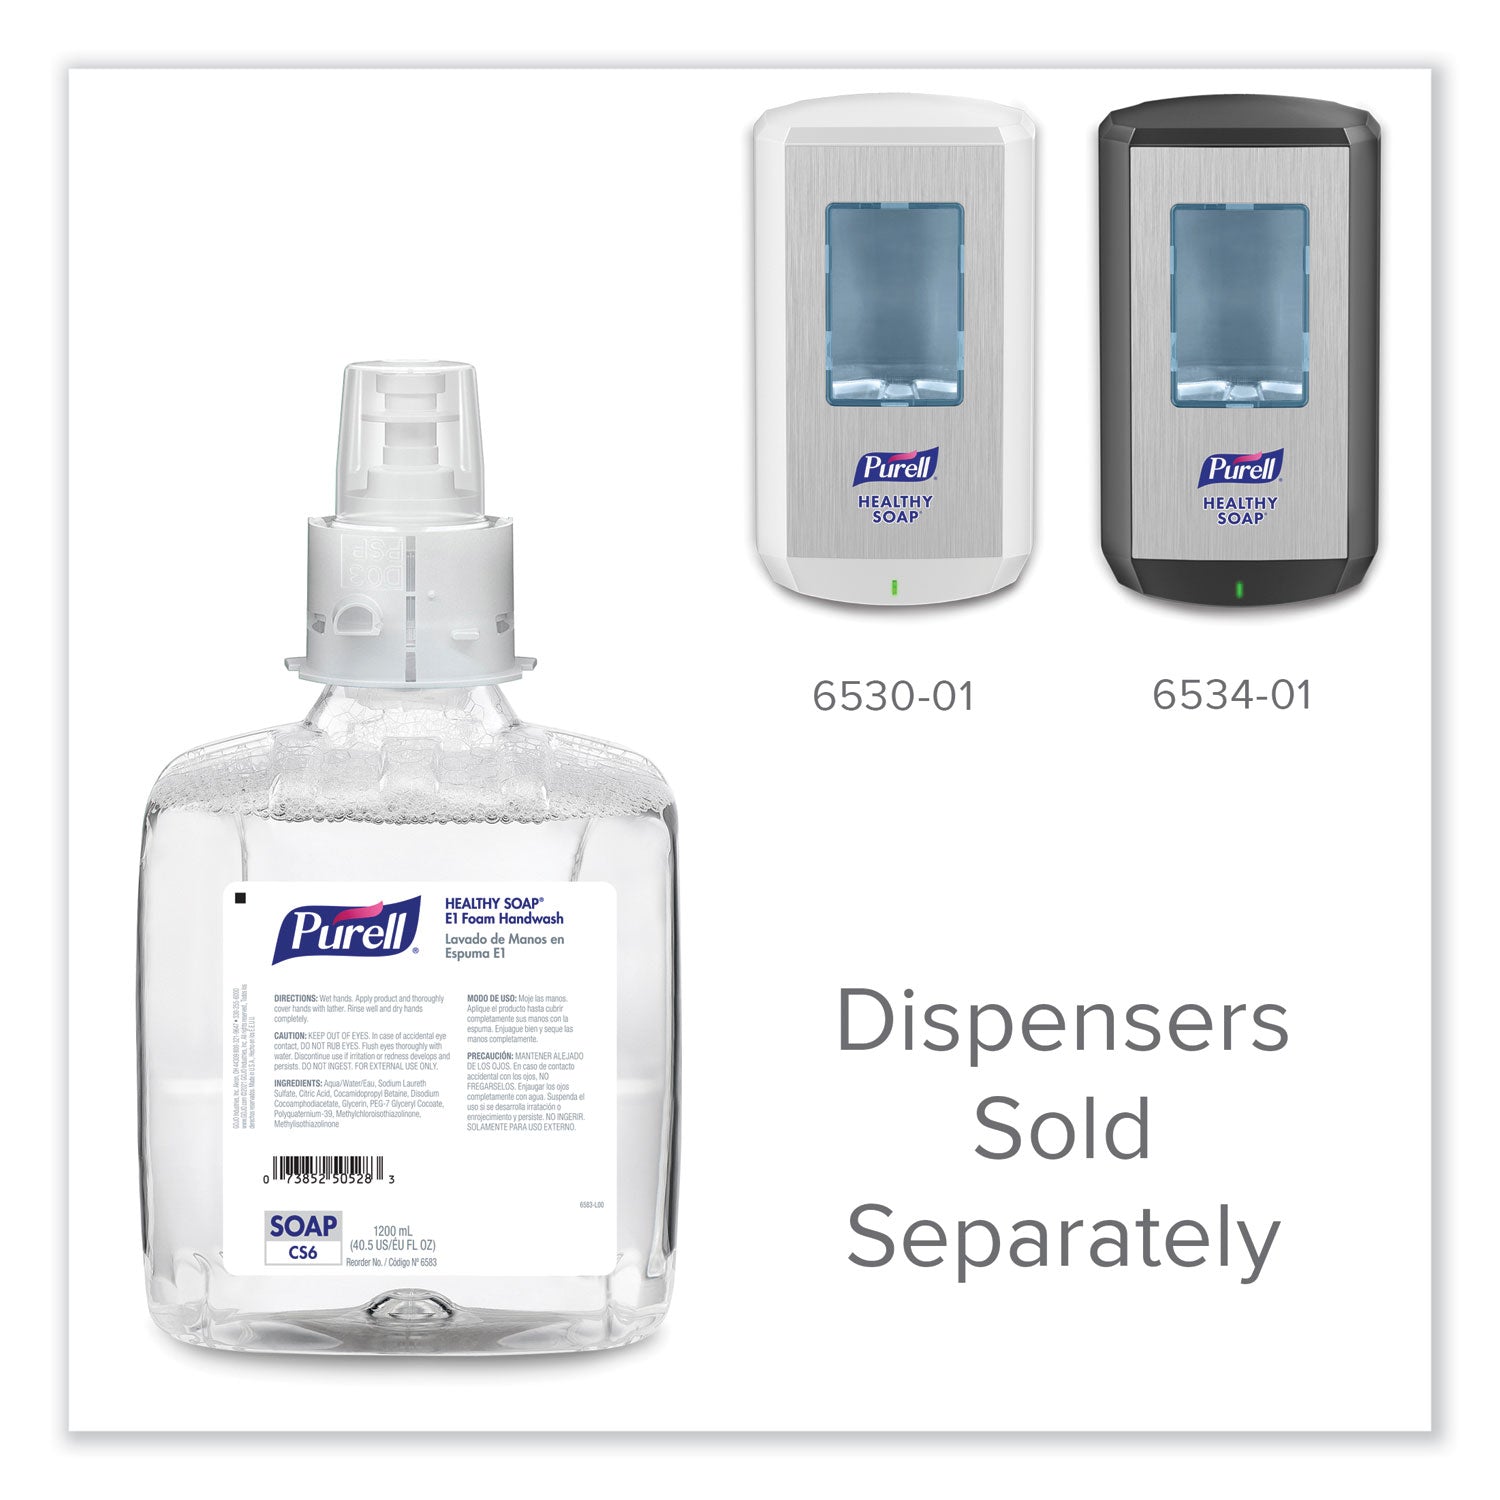 healthy-soap-e1-foam-handwash-for-cs6-dispensers-fragrance-free-1200-ml-2-carton_goj658302ct - 6